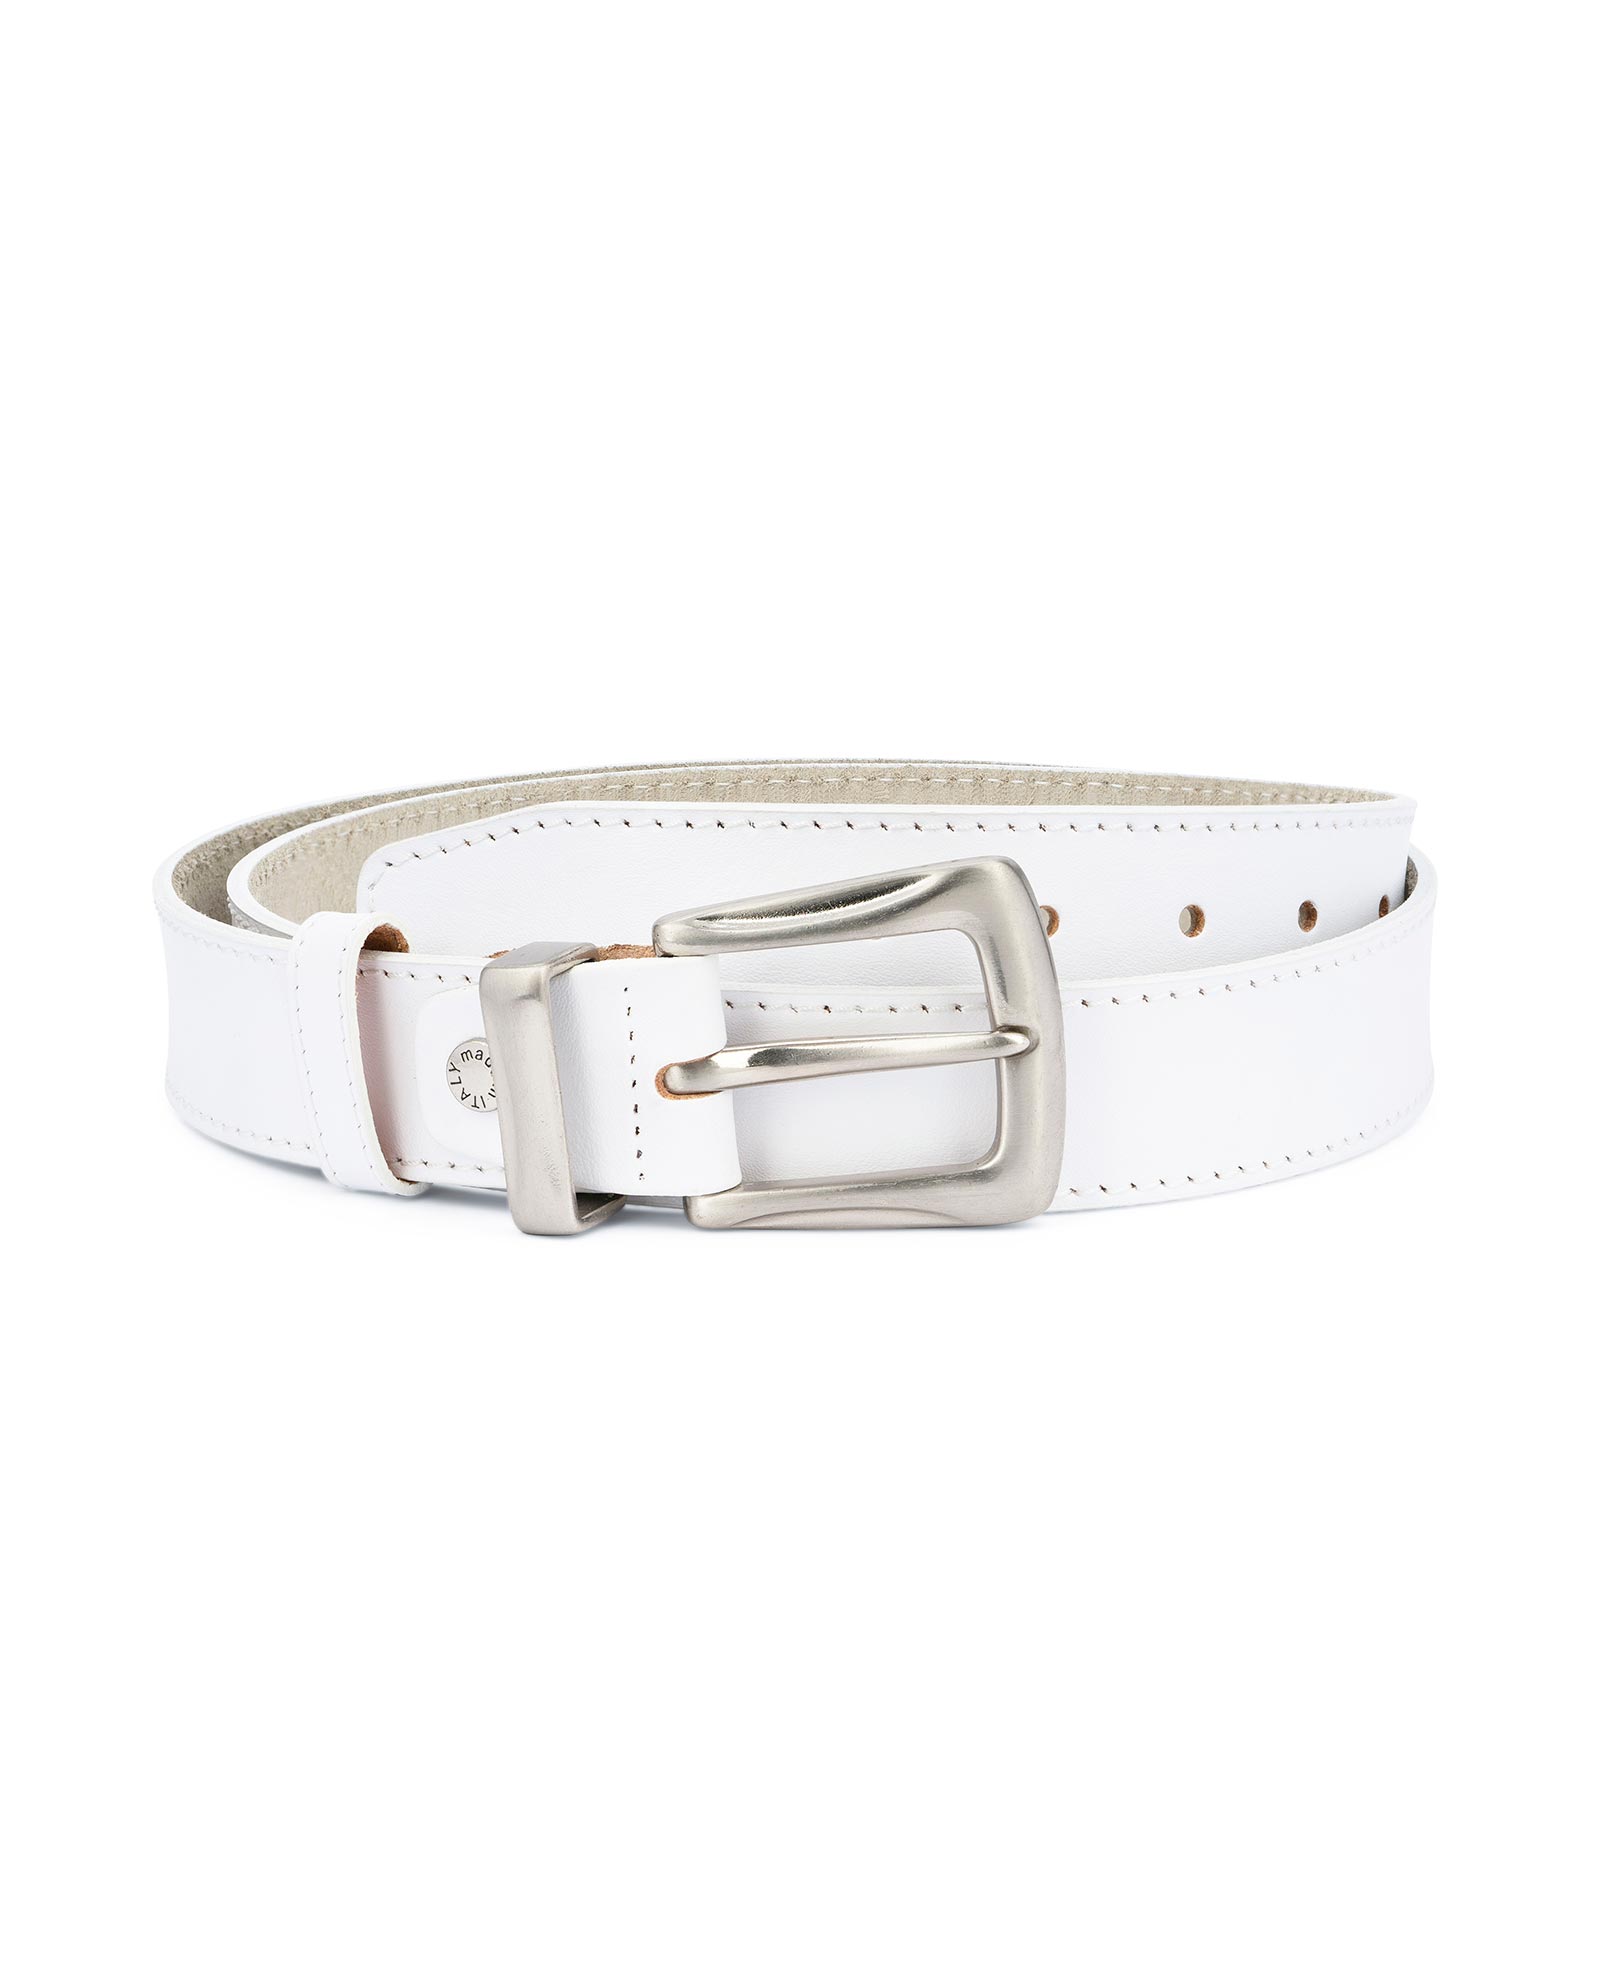 Buy Men's White Leather Belt With Silver Buckle | LeatherBeltsOnline.com